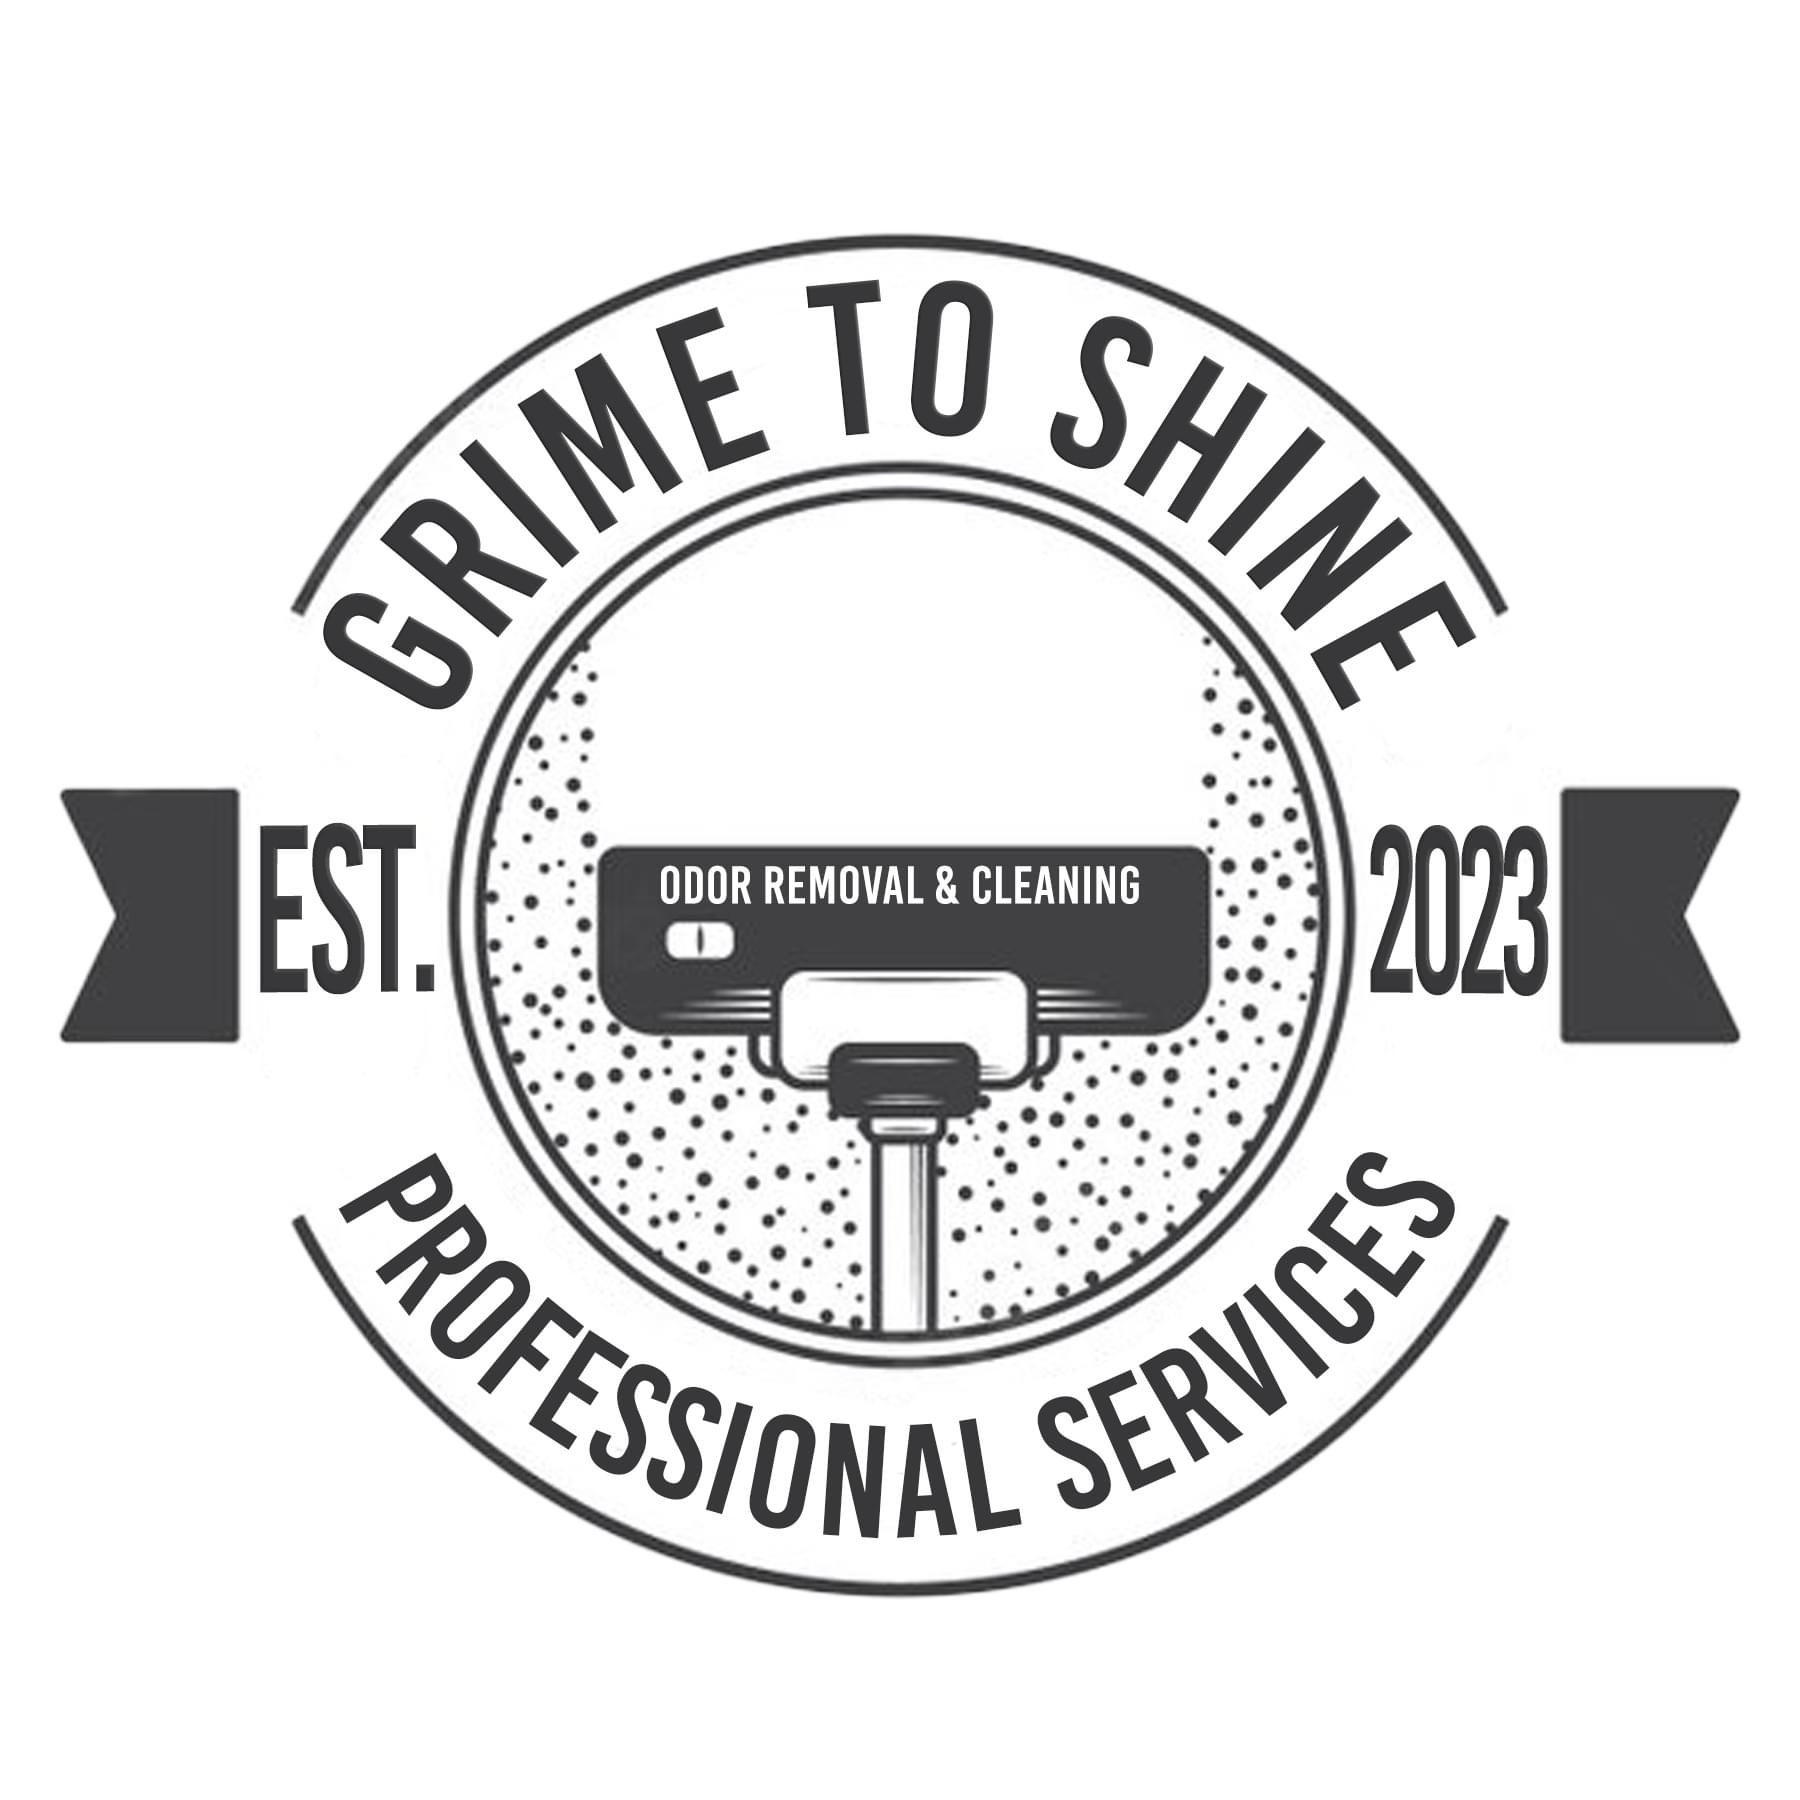 Grime to Shine Professional Services LLC Logo